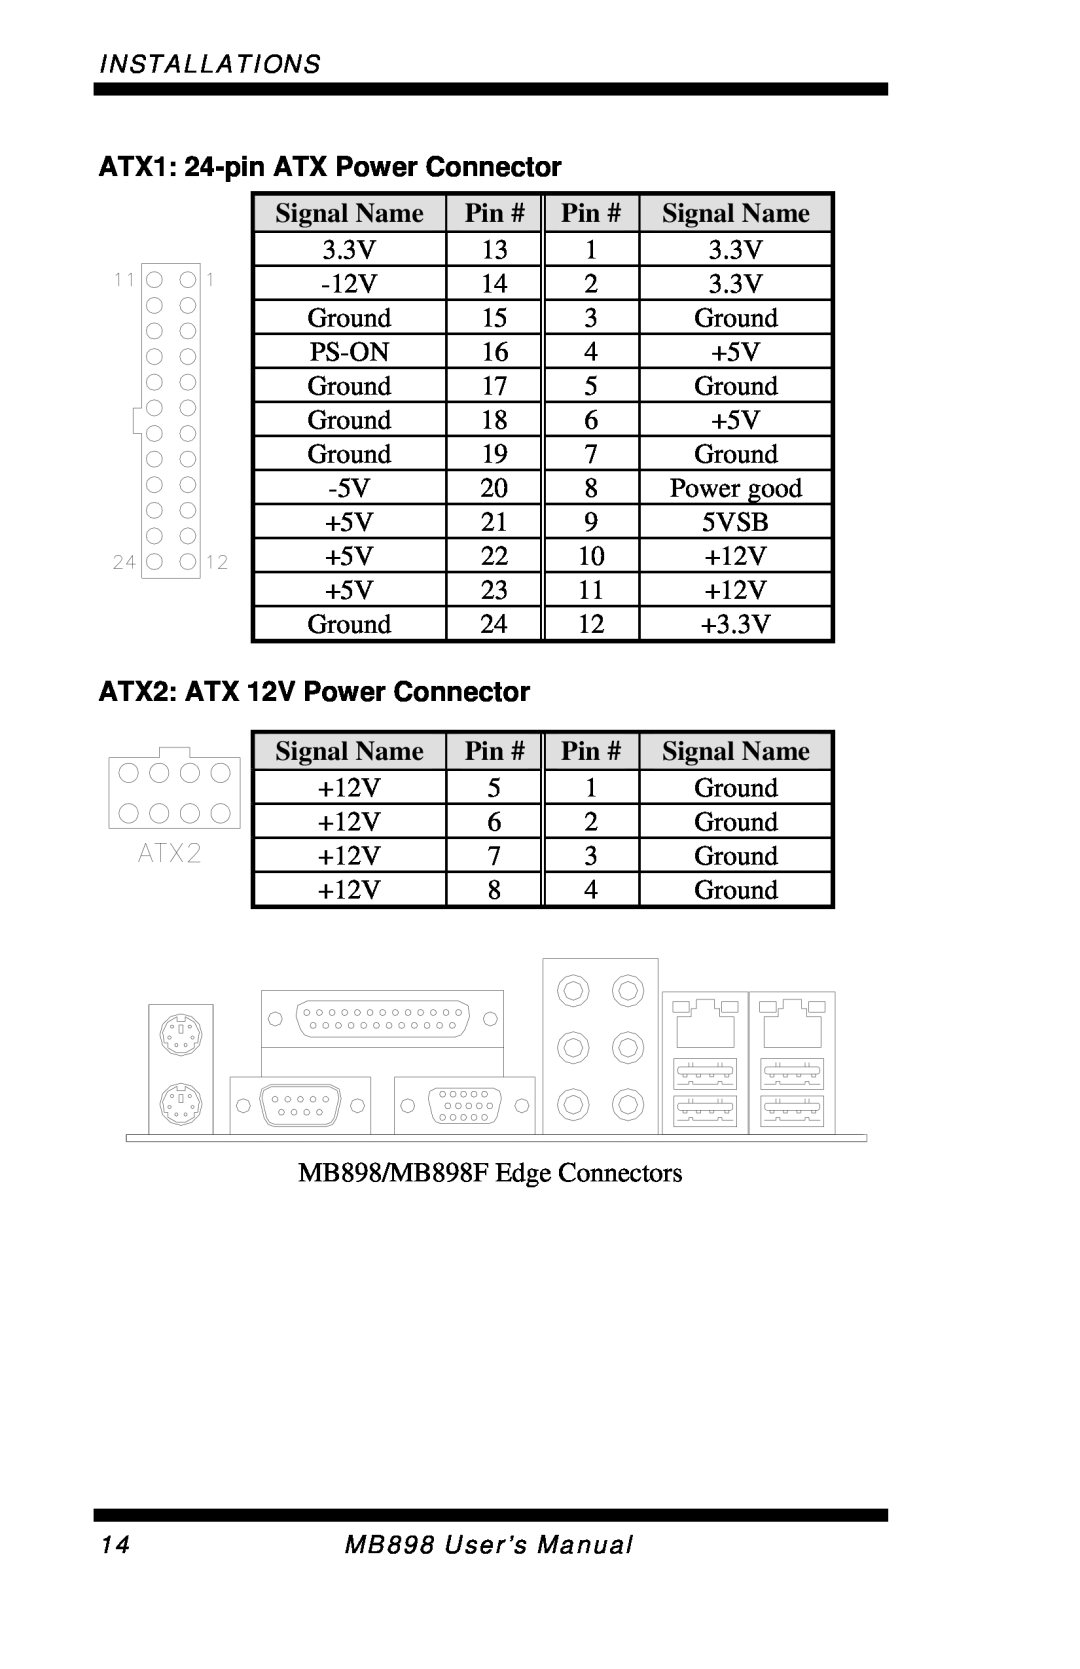 Intel MB898RF, MB898F user manual ATX1: 24-pinATX Power Connector, ATX2: ATX 12V Power Connector, Signal Name, Pin # 